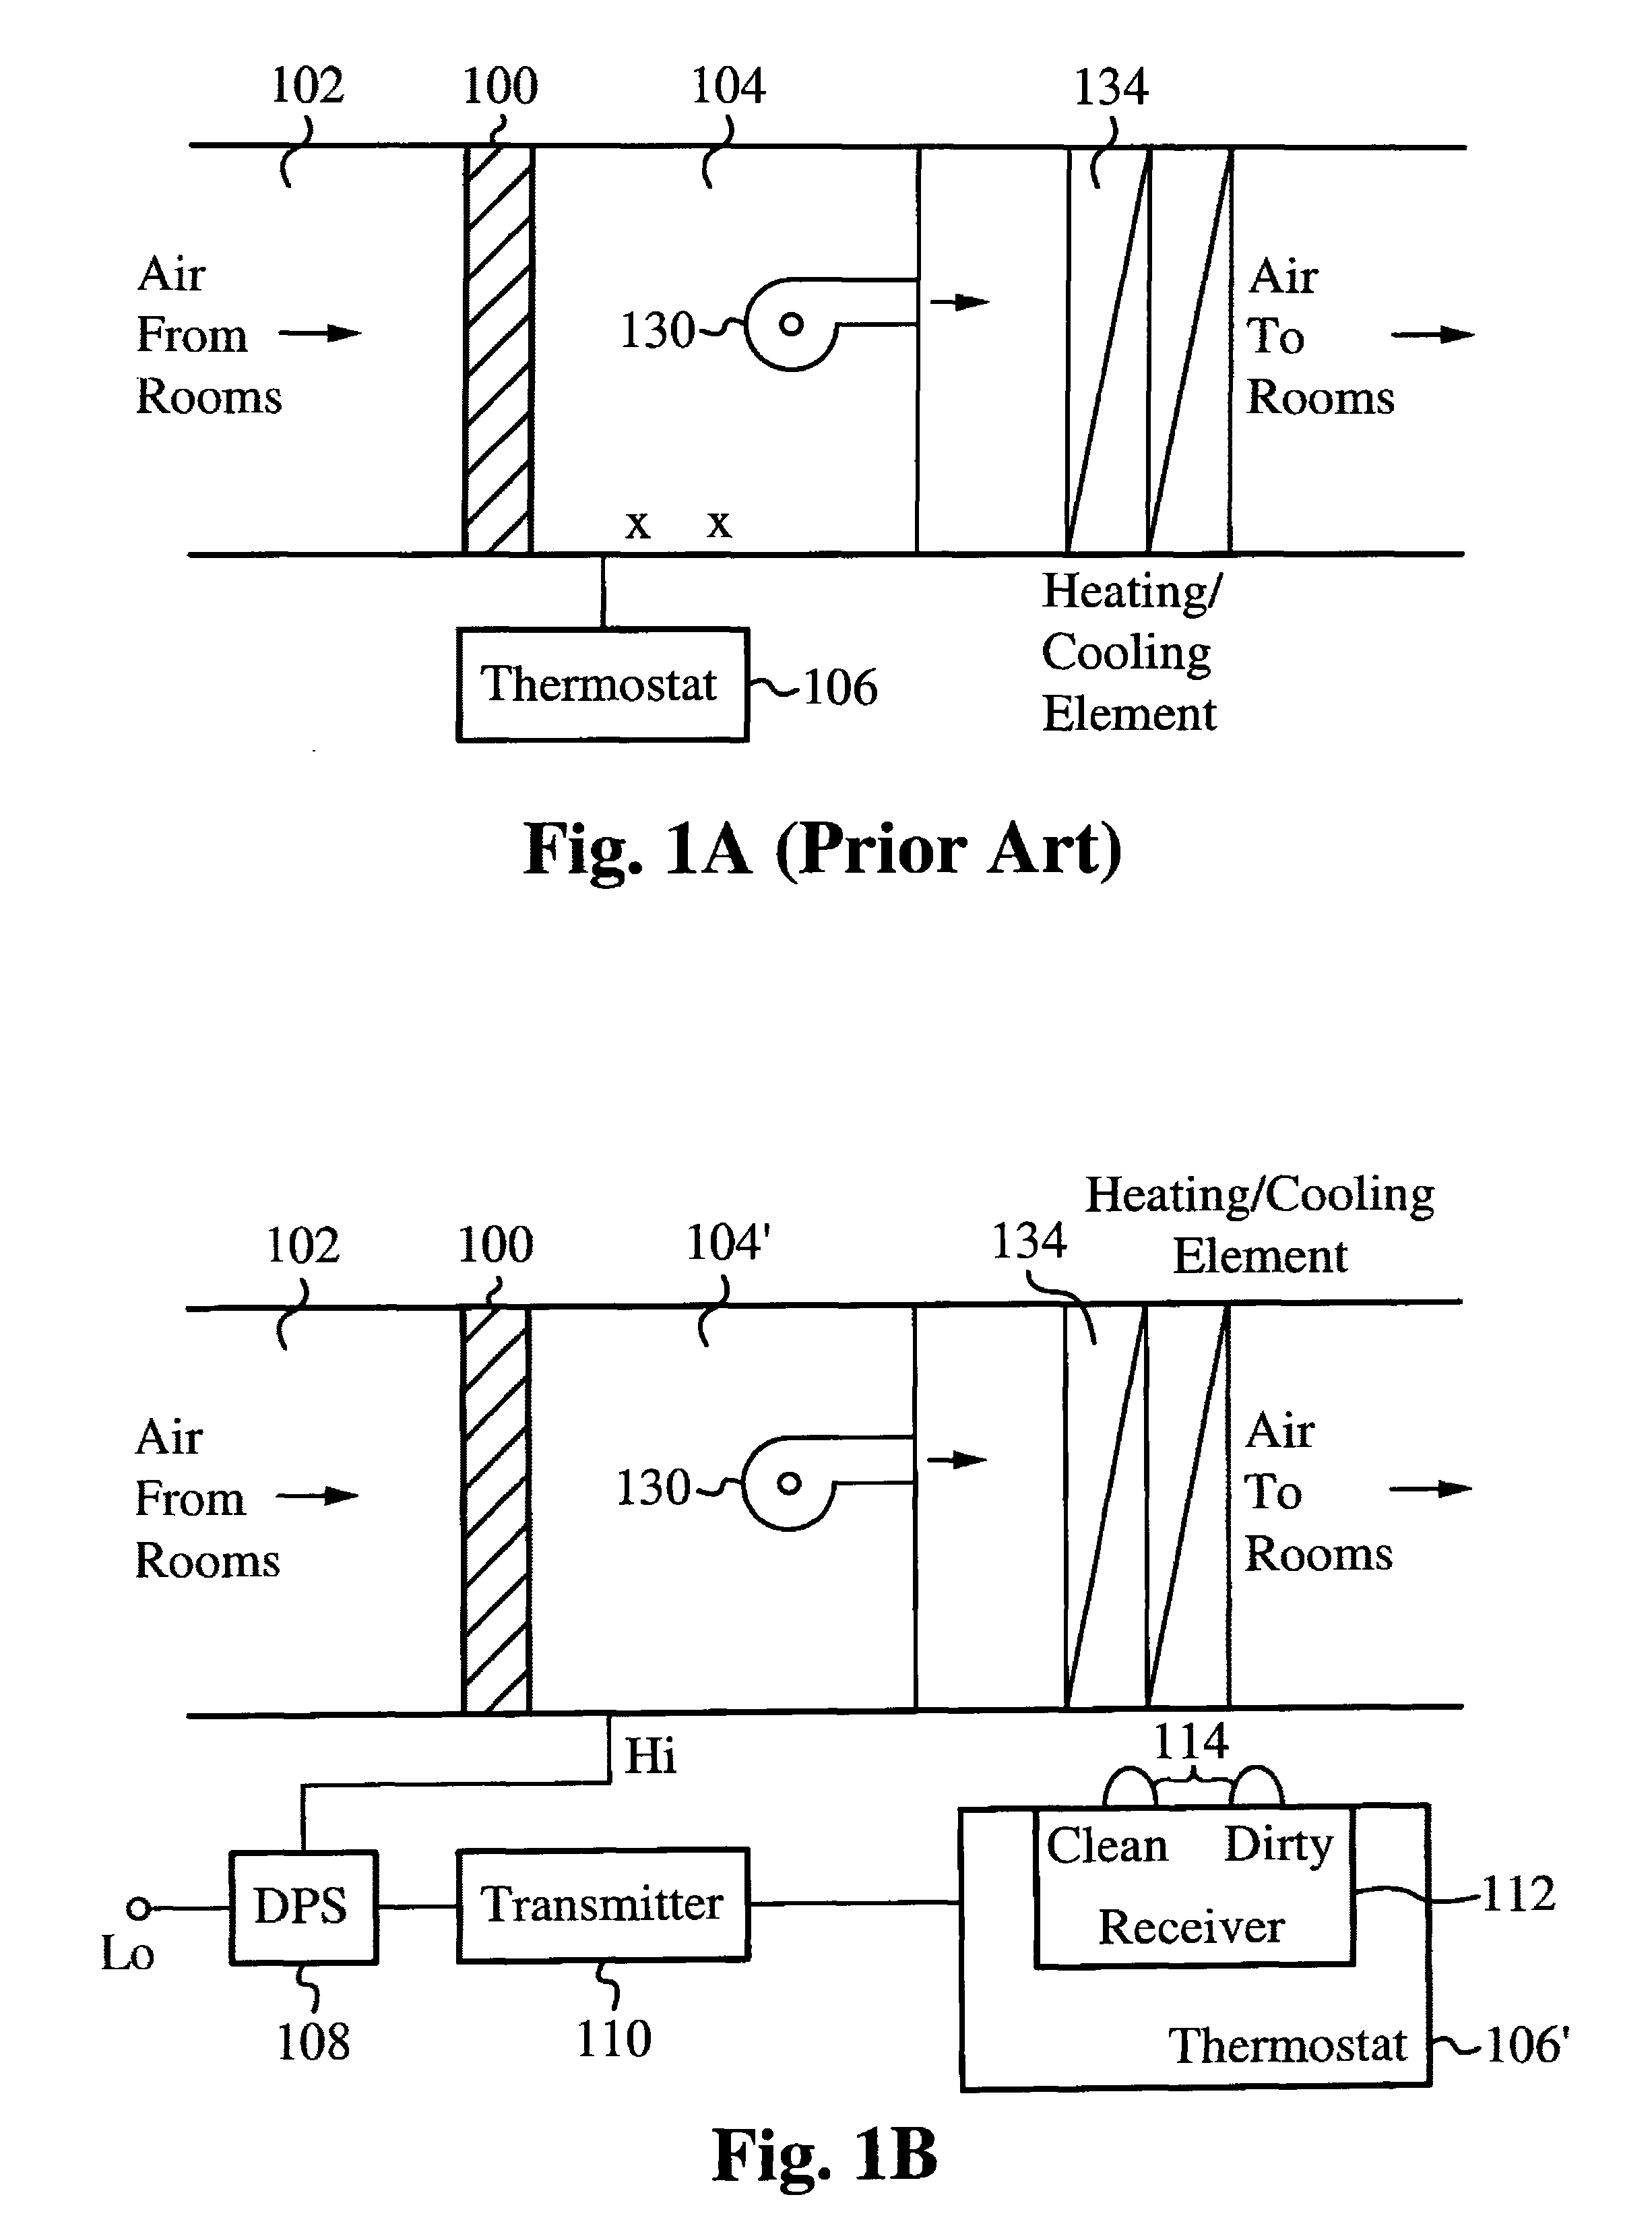 Furnace filter indicator